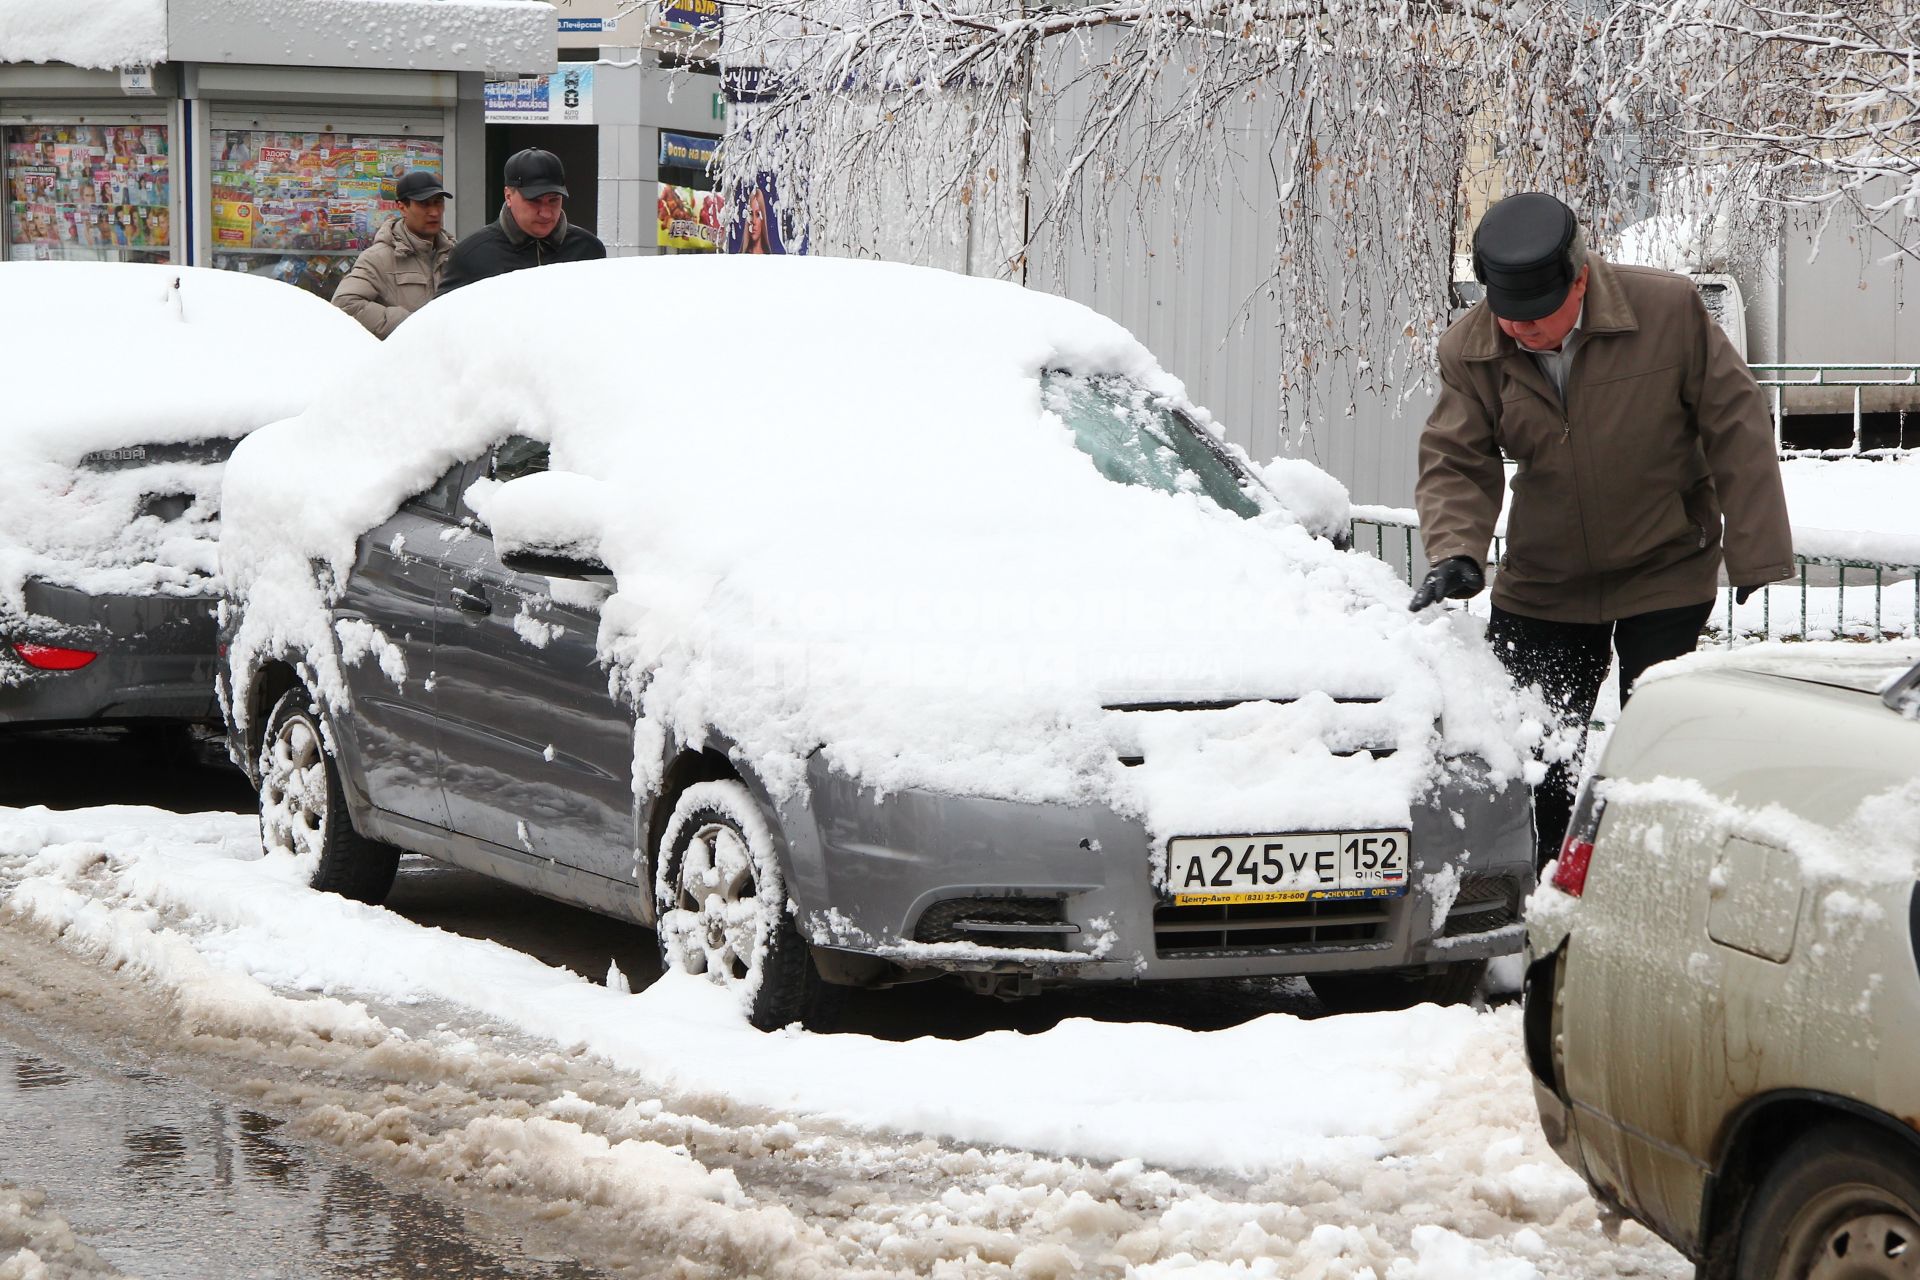 Нижний Новгород. Снегопад в апреле. Мужчина очищает машину от снега.